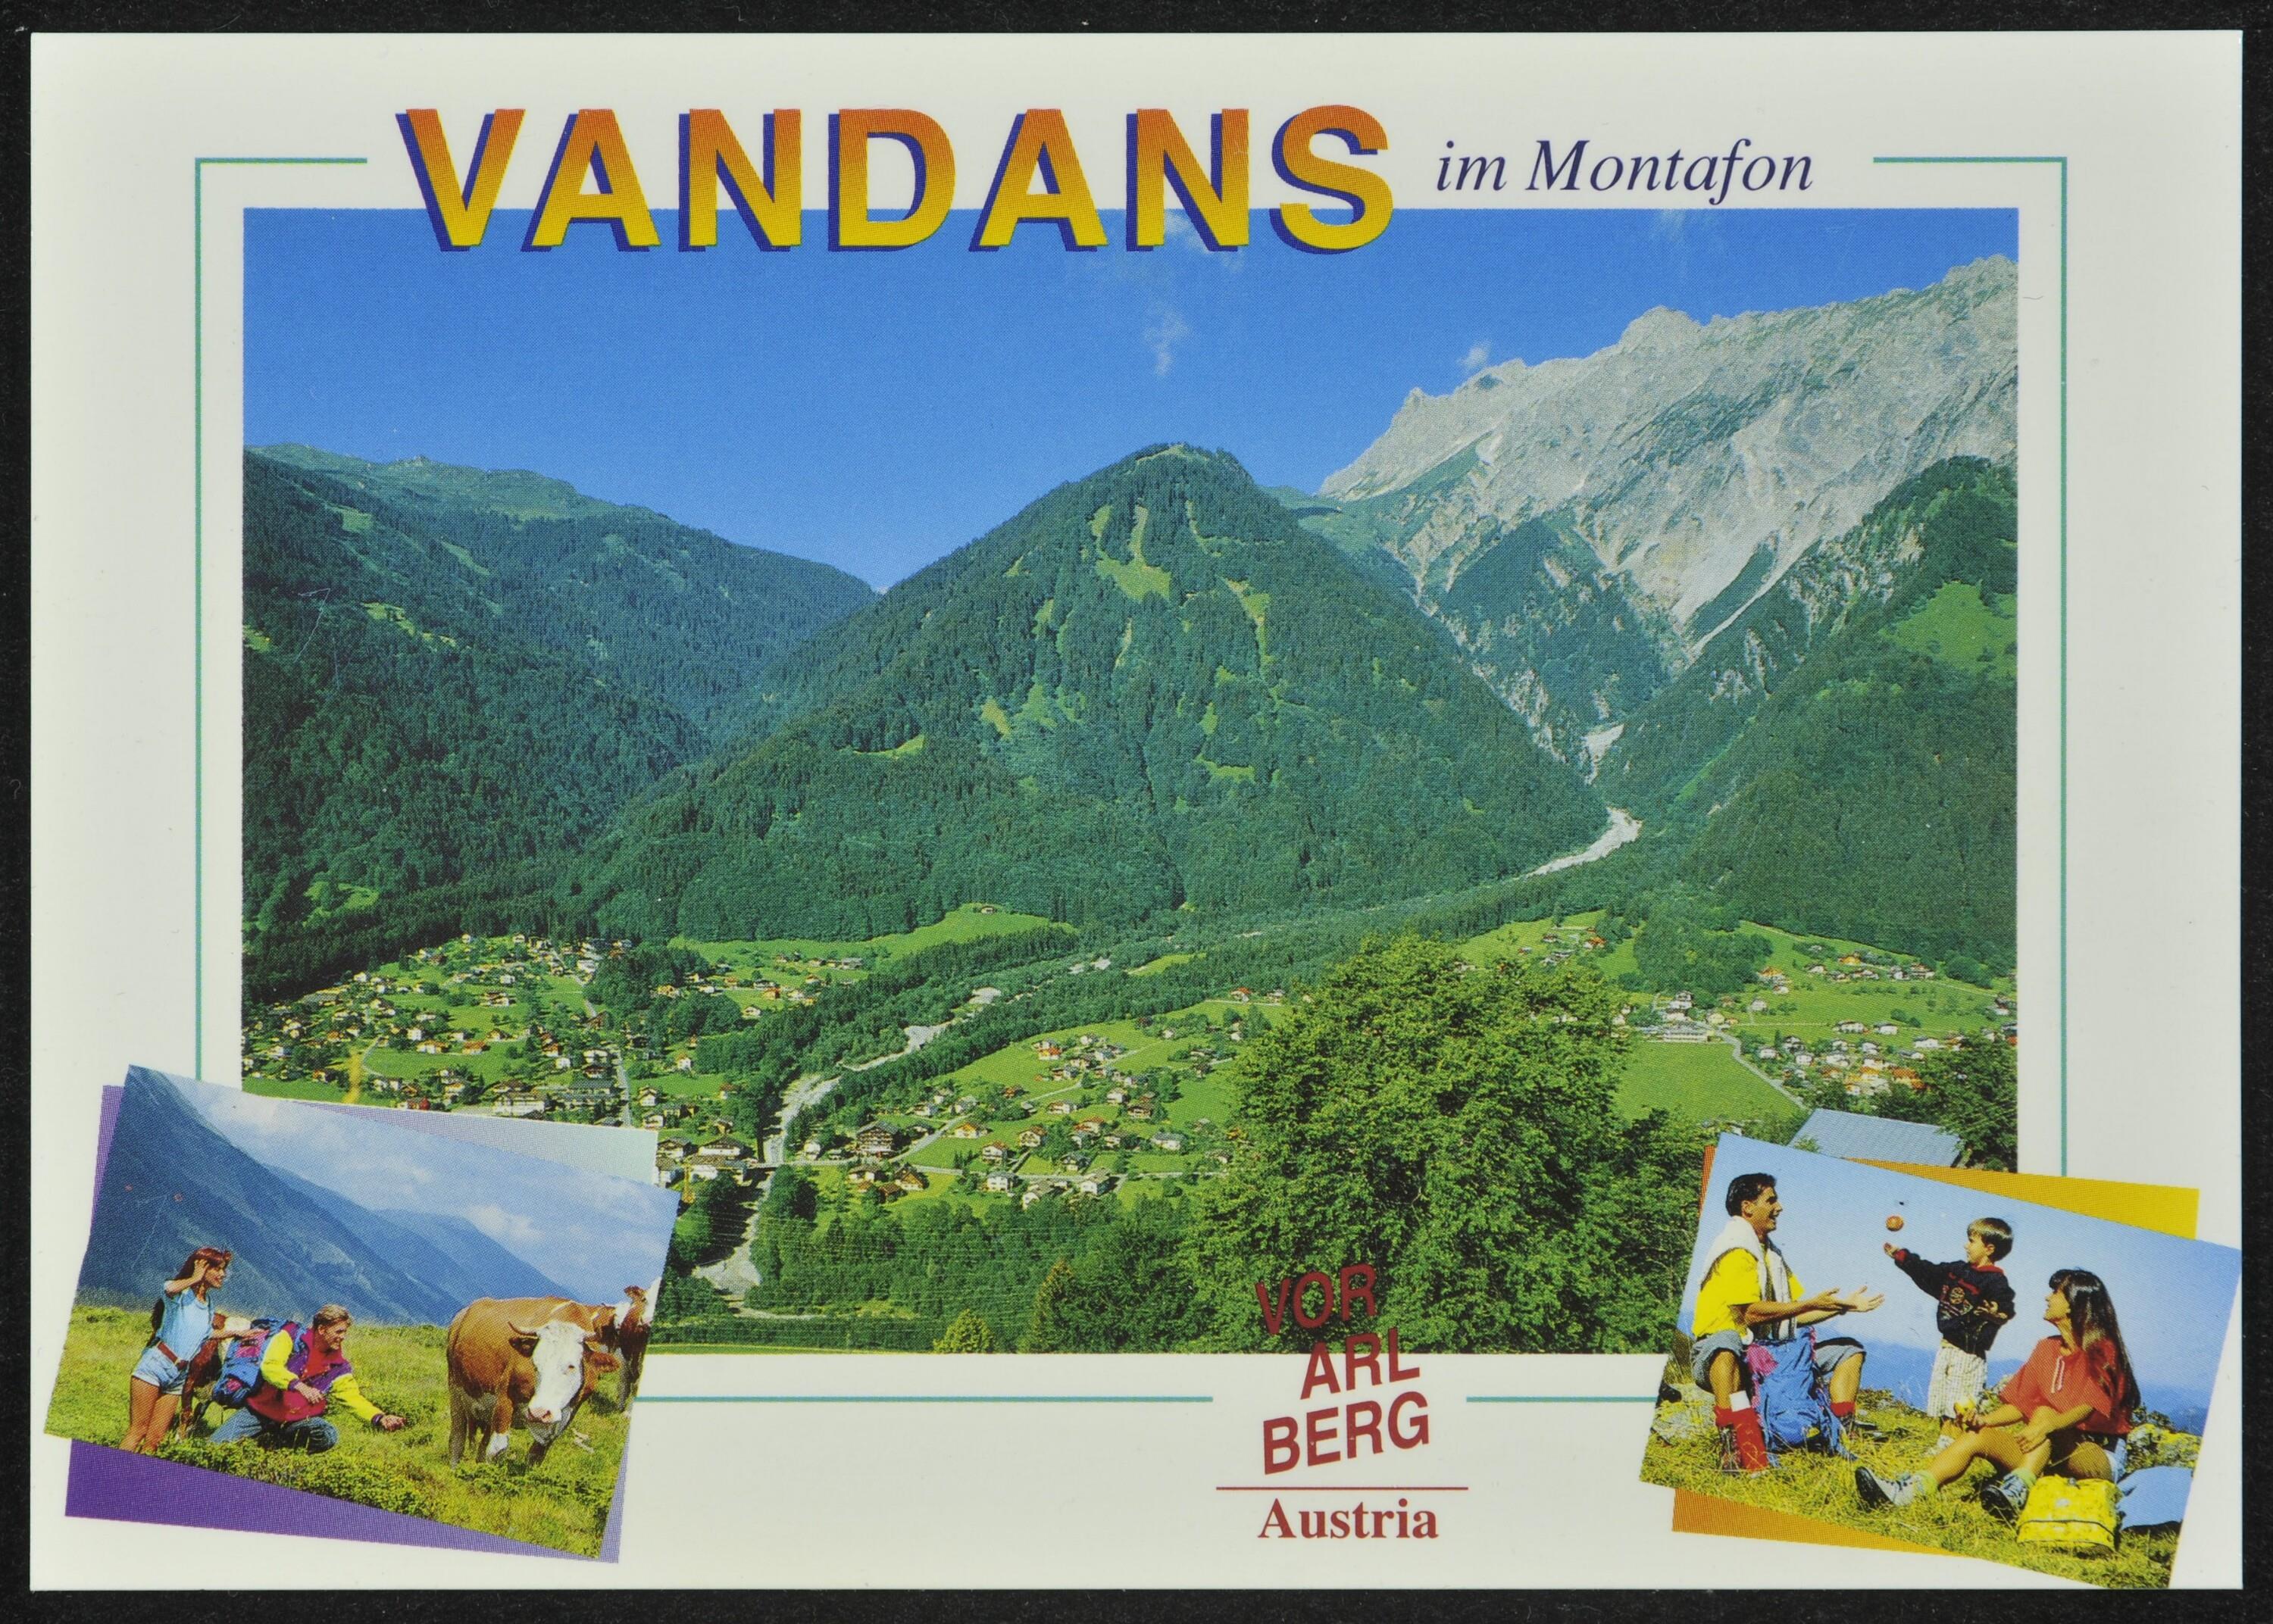 Vandans im Montafon Vorarlberg Austria></div>


    <hr>
    <div class=